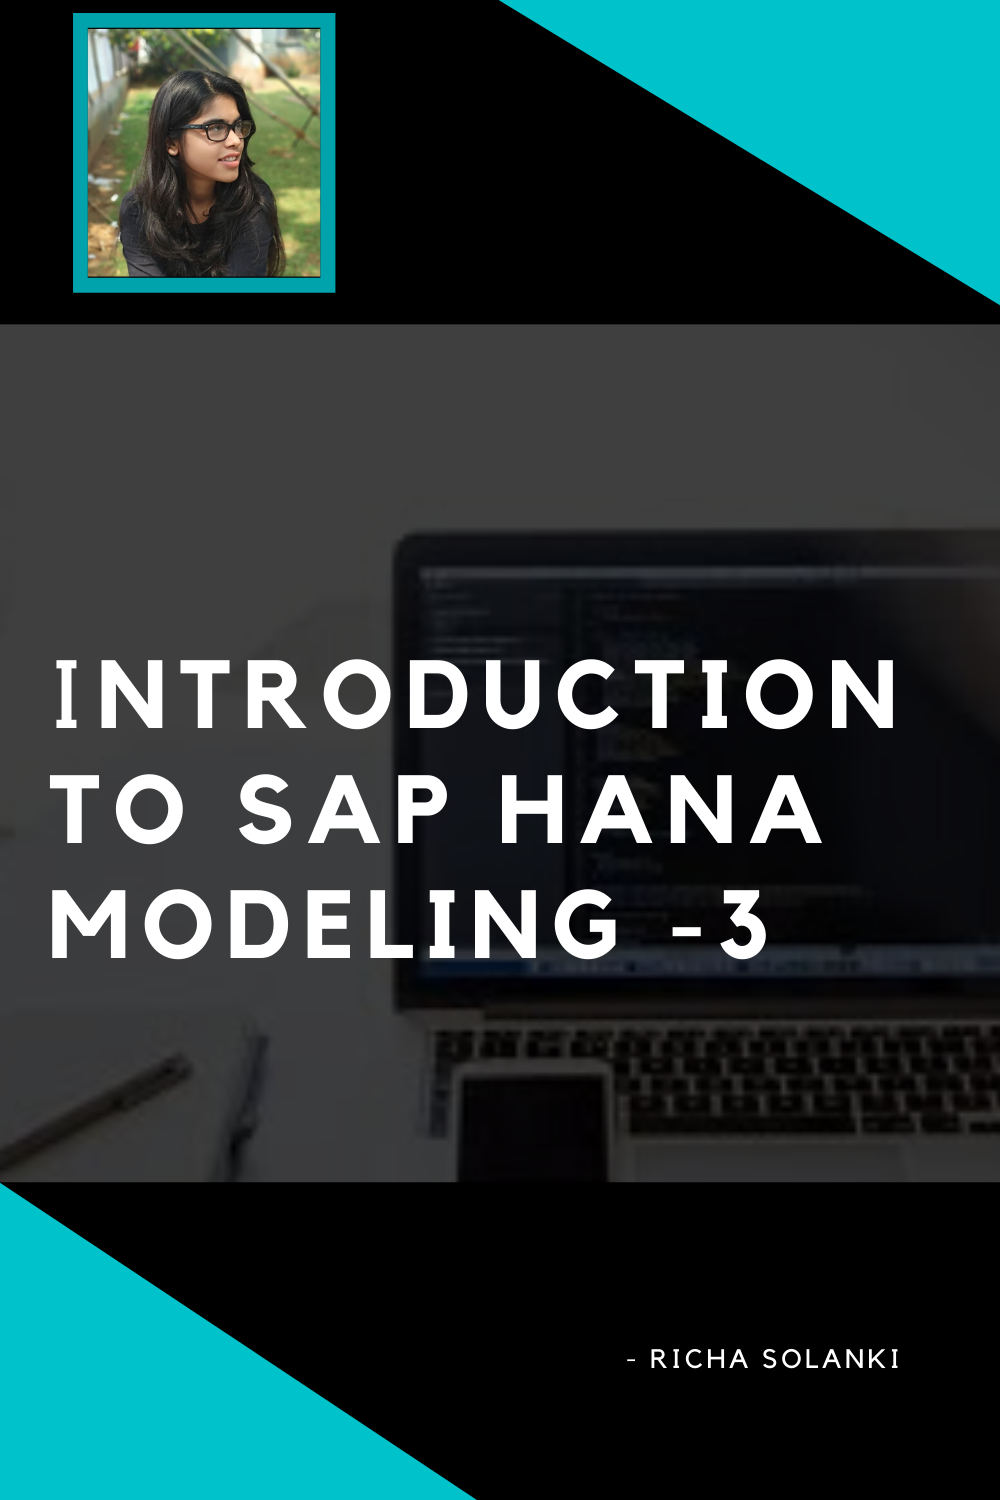 https://www.minshtech.in/2020/06/introduction-to-sap-hana-modeling-3.html